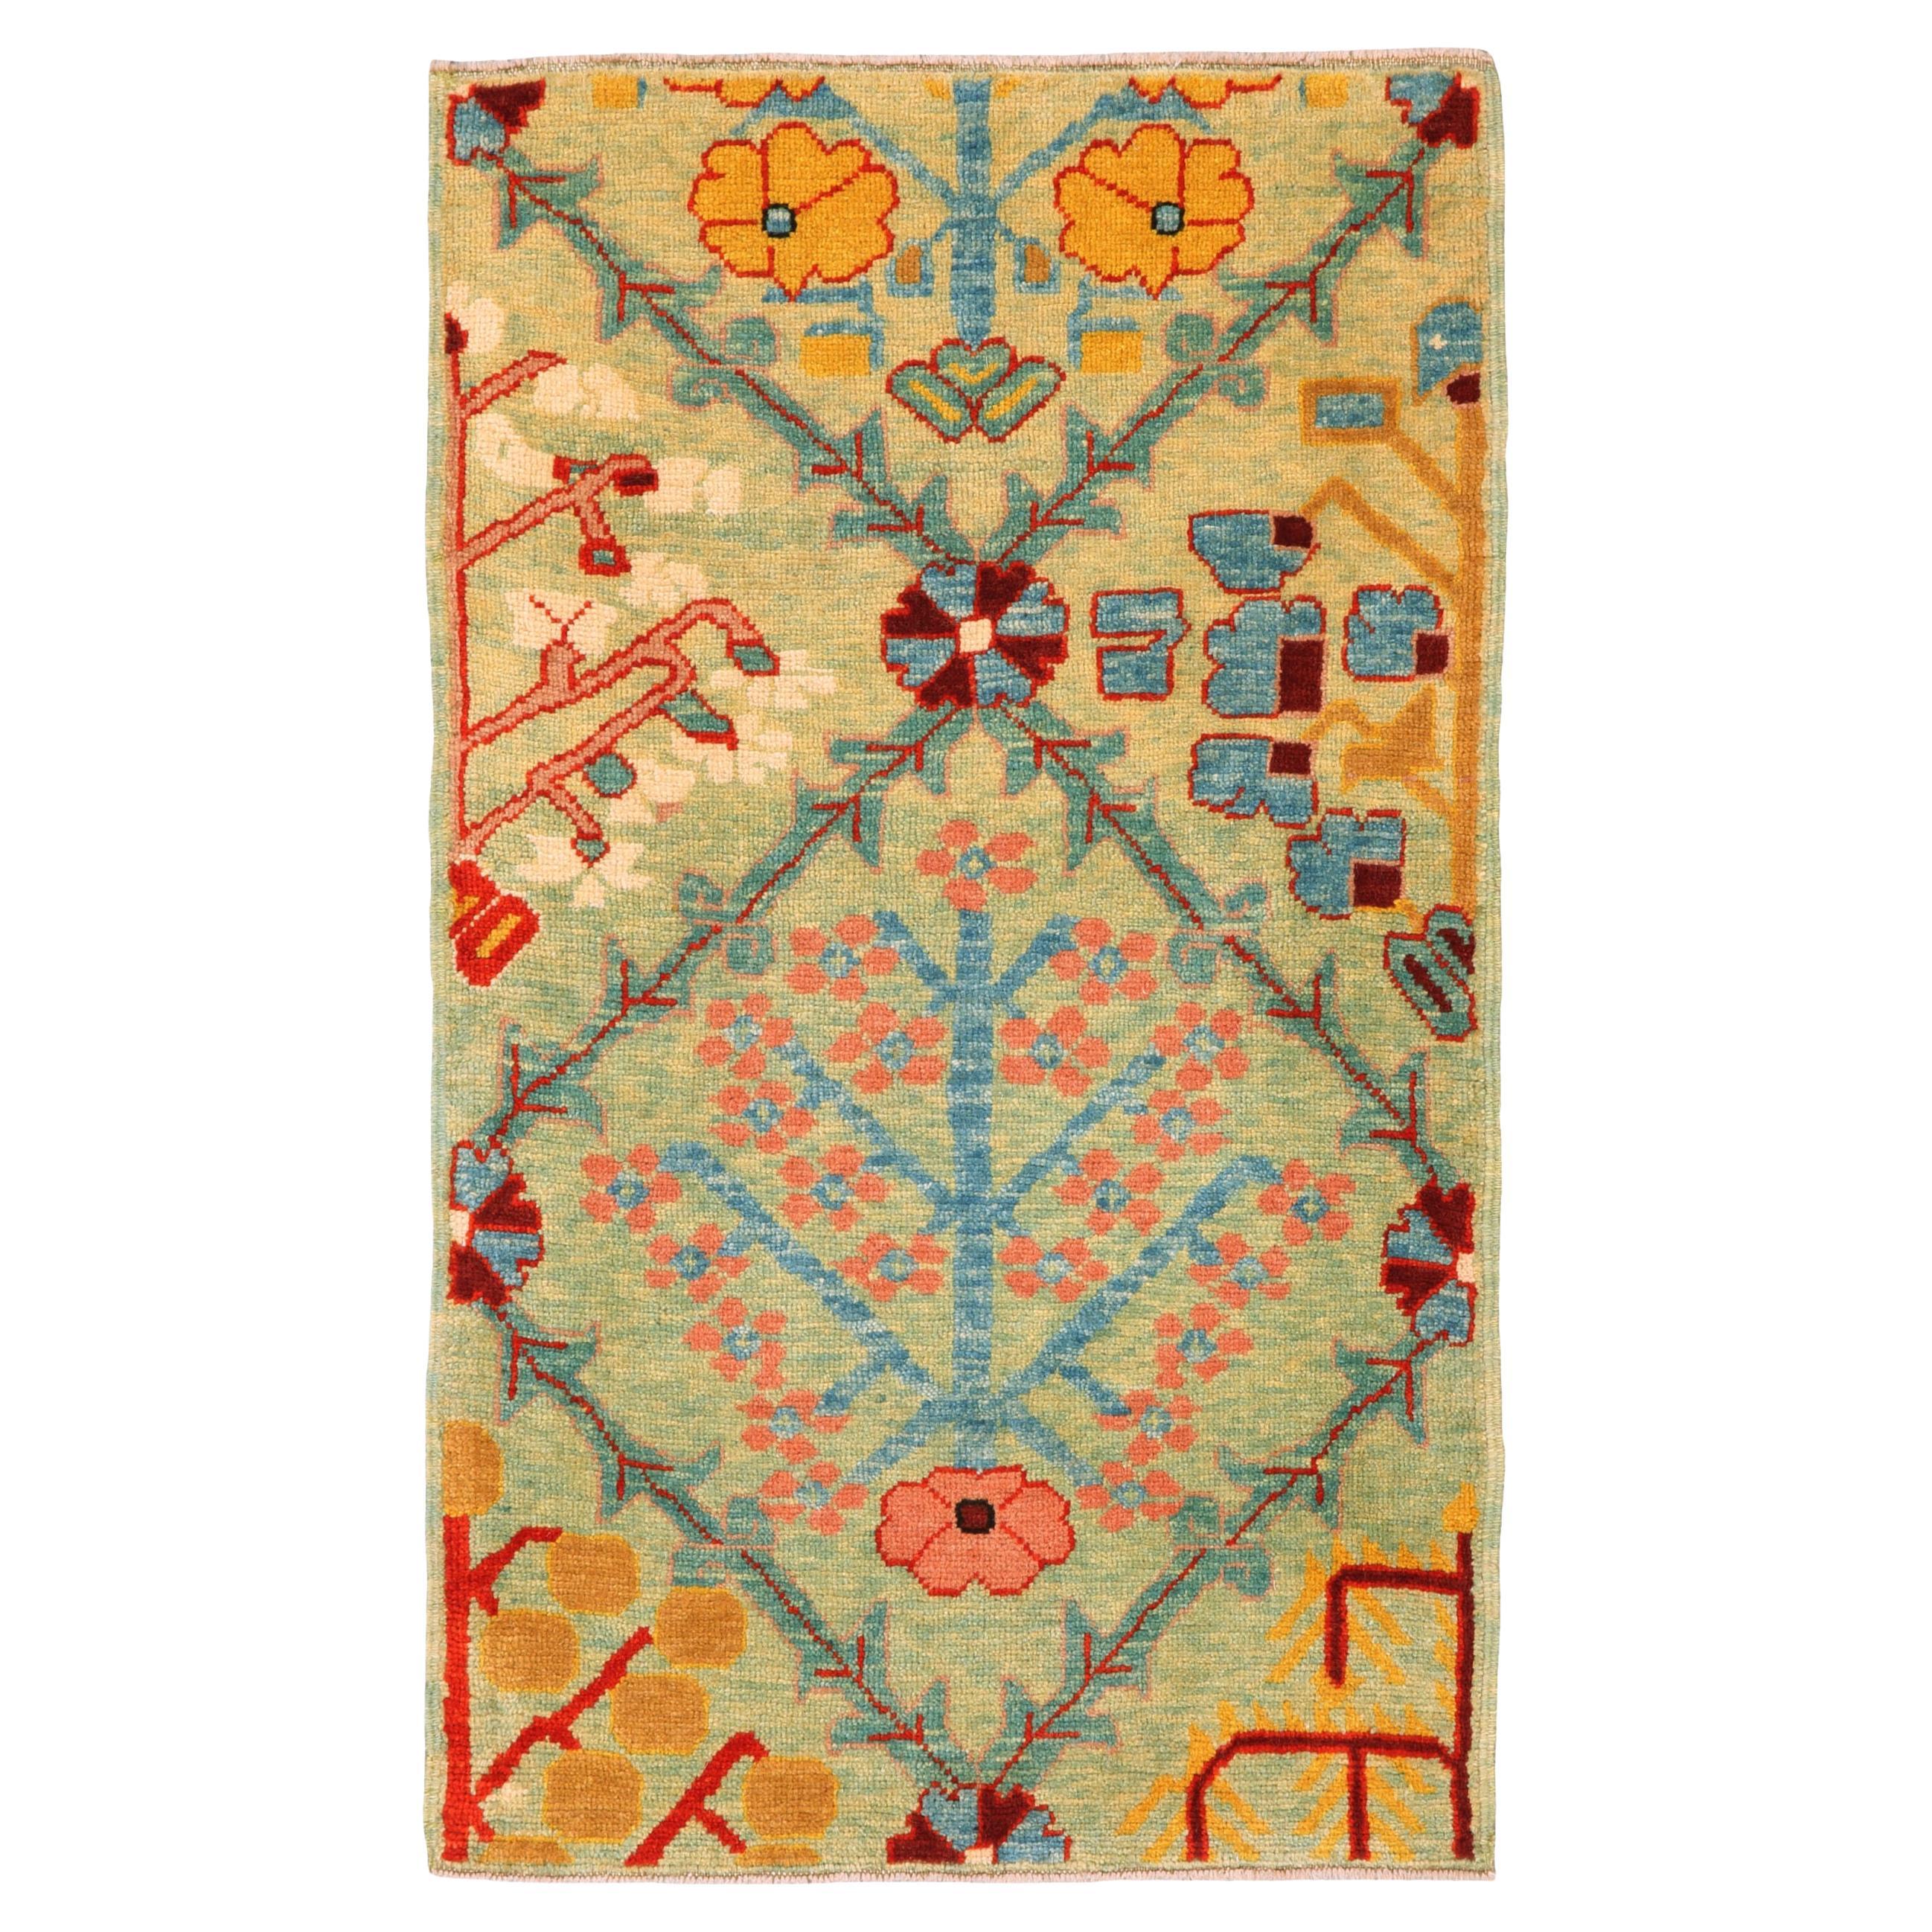 Ararat Rugs Shrubs in Lattice Rug Kurdish Persian Revival Carpet Natural Dyed